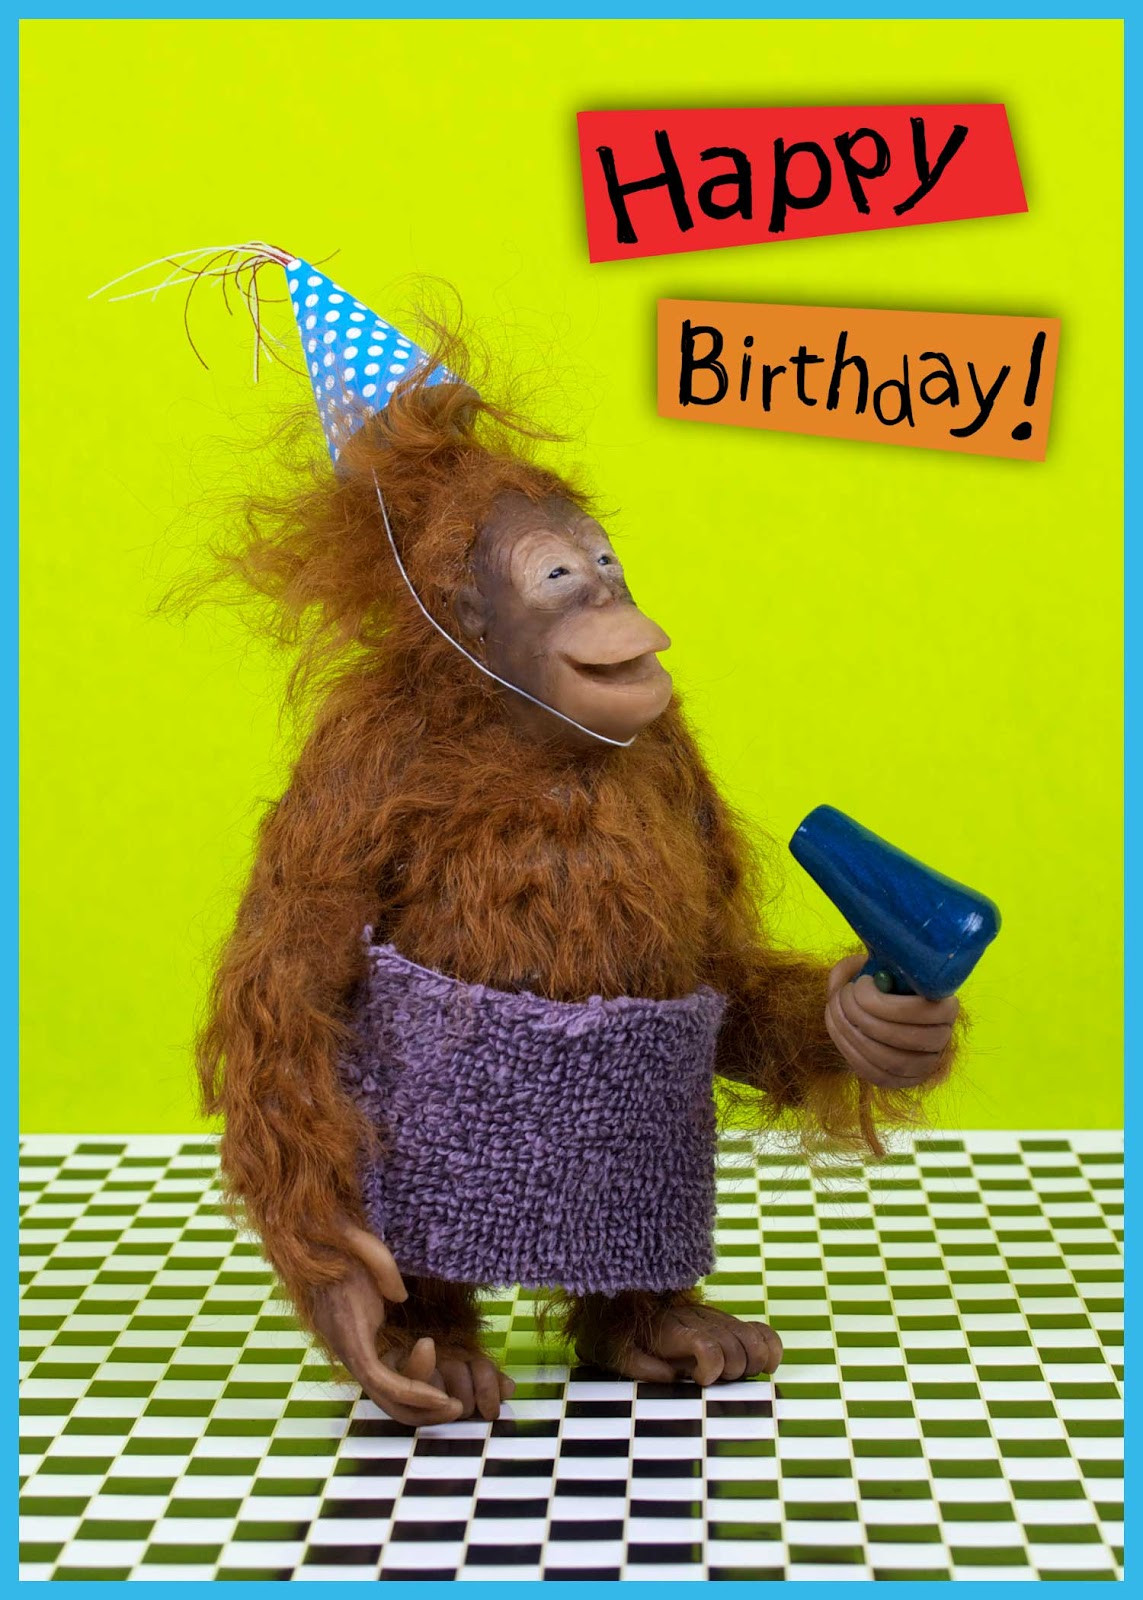 Happy Birthday Cards Funny
 Caroline Gray Work in Progress Kids’ Birthday Cards